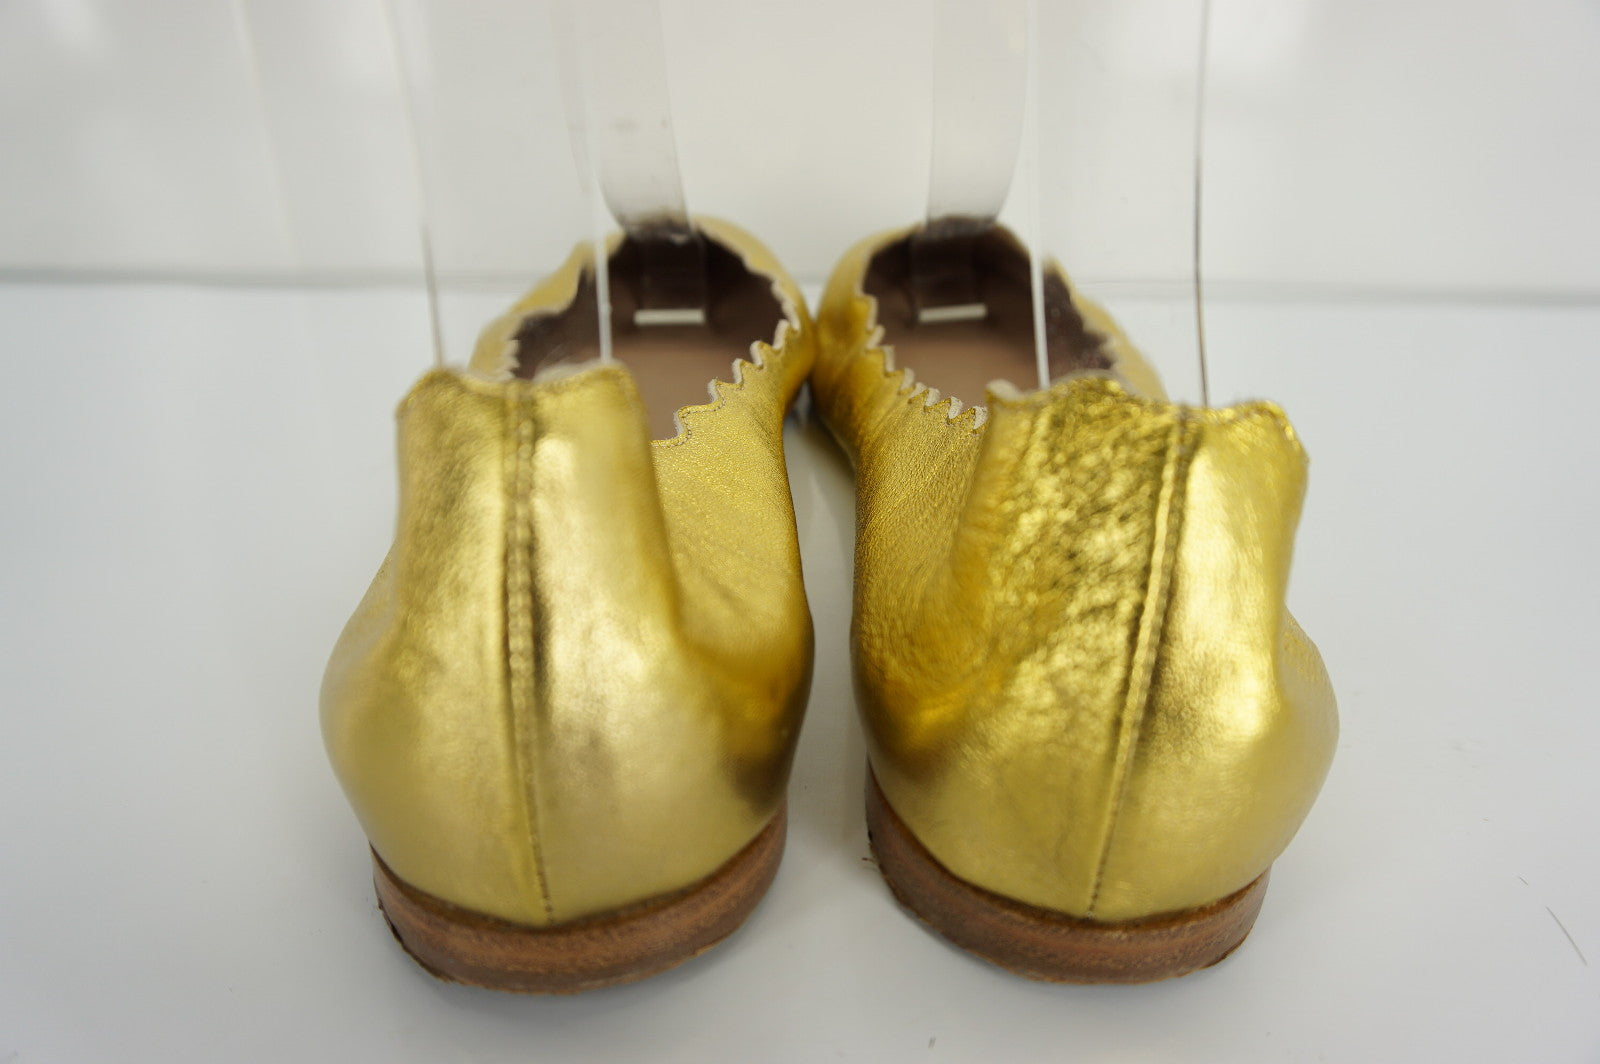 New Chloé Lauren Gold Scalloped Ballet Flat SZ 36.5 metallic Leather $475